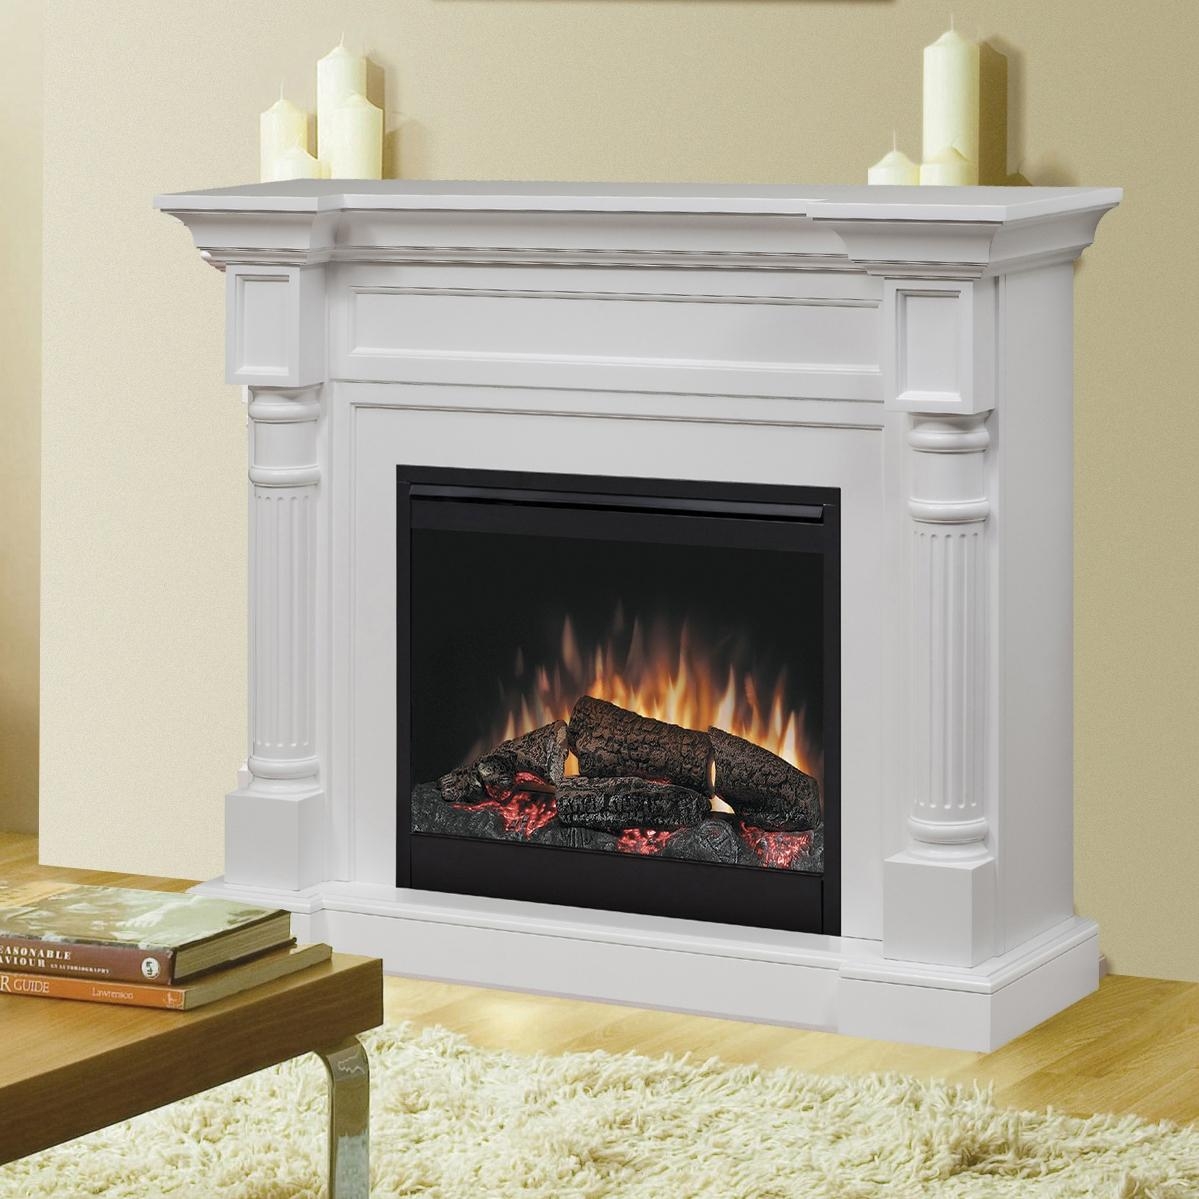 Spitfire Fireplace Heater Inspirational 62 Electric Fireplace Charming Fireplace